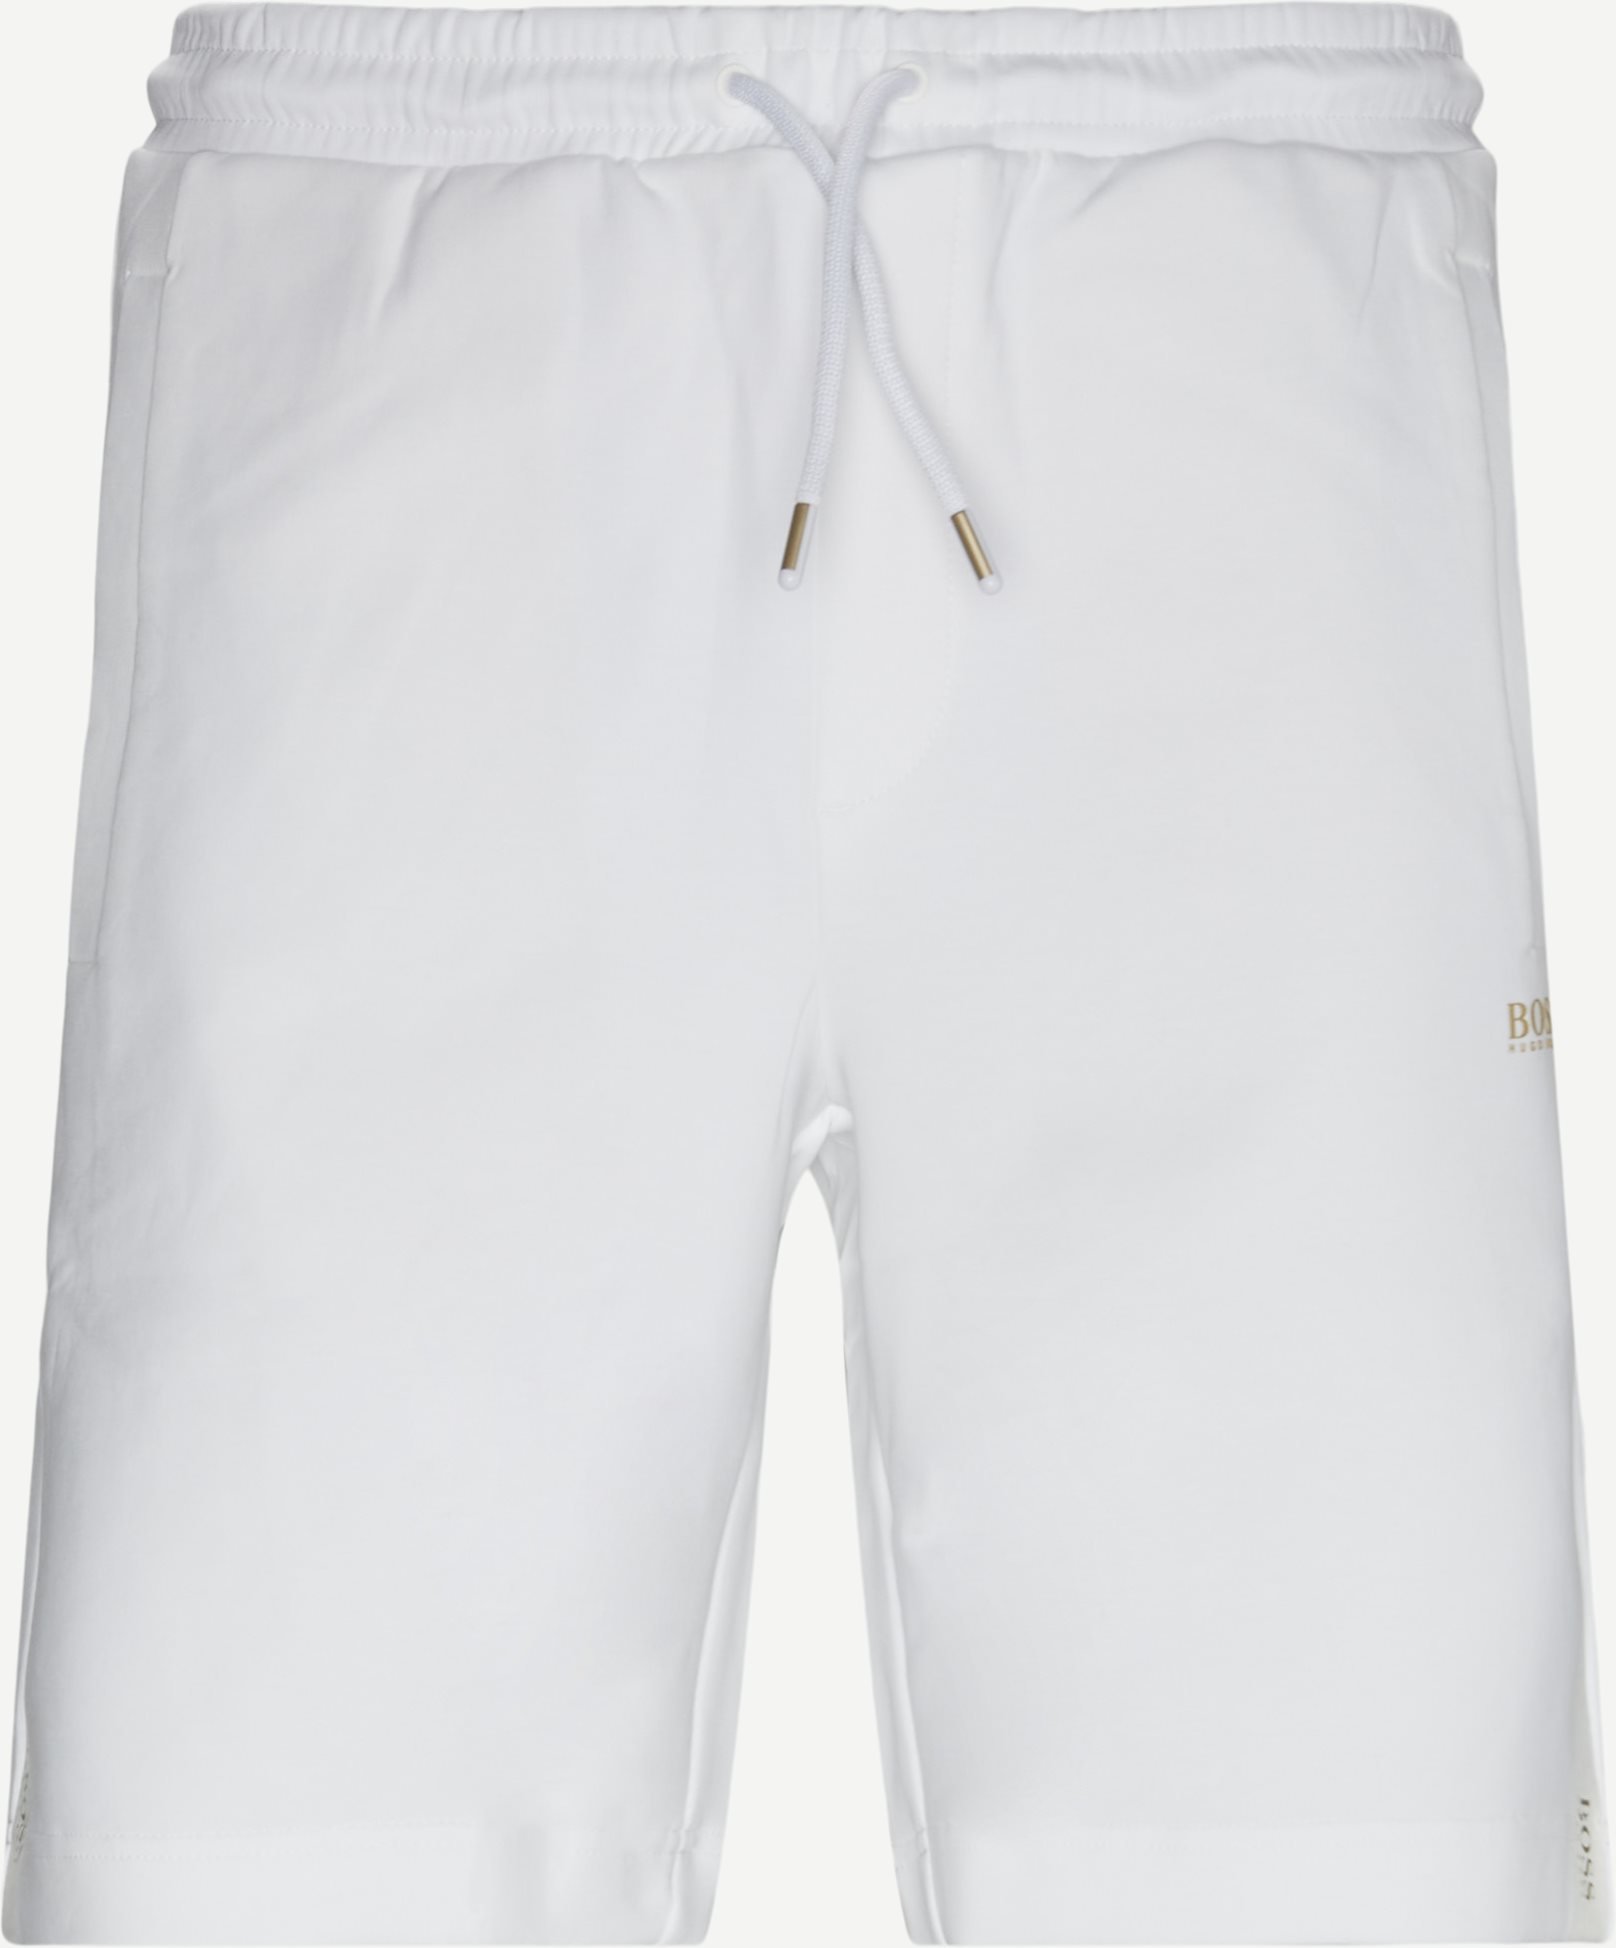 Headlo 2 Sweatshorts - Shorts - Regular fit - White